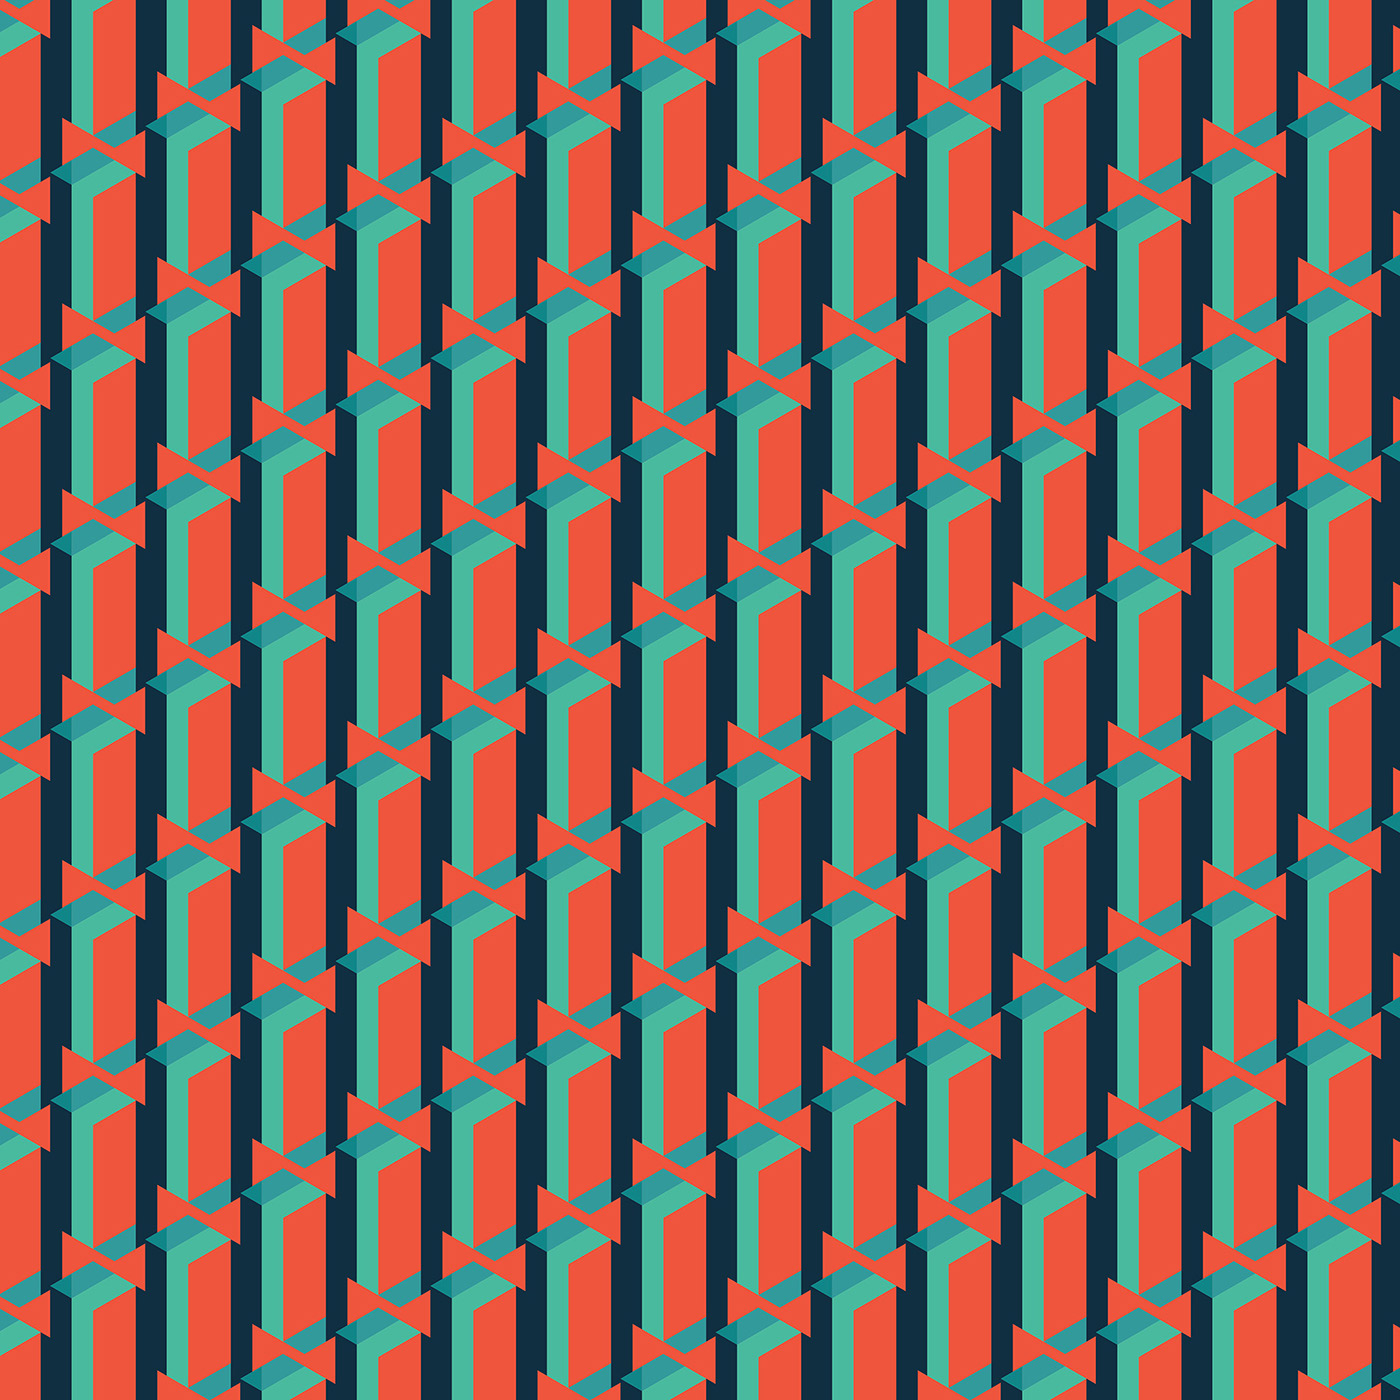 Patterns pattern project weekly pattern